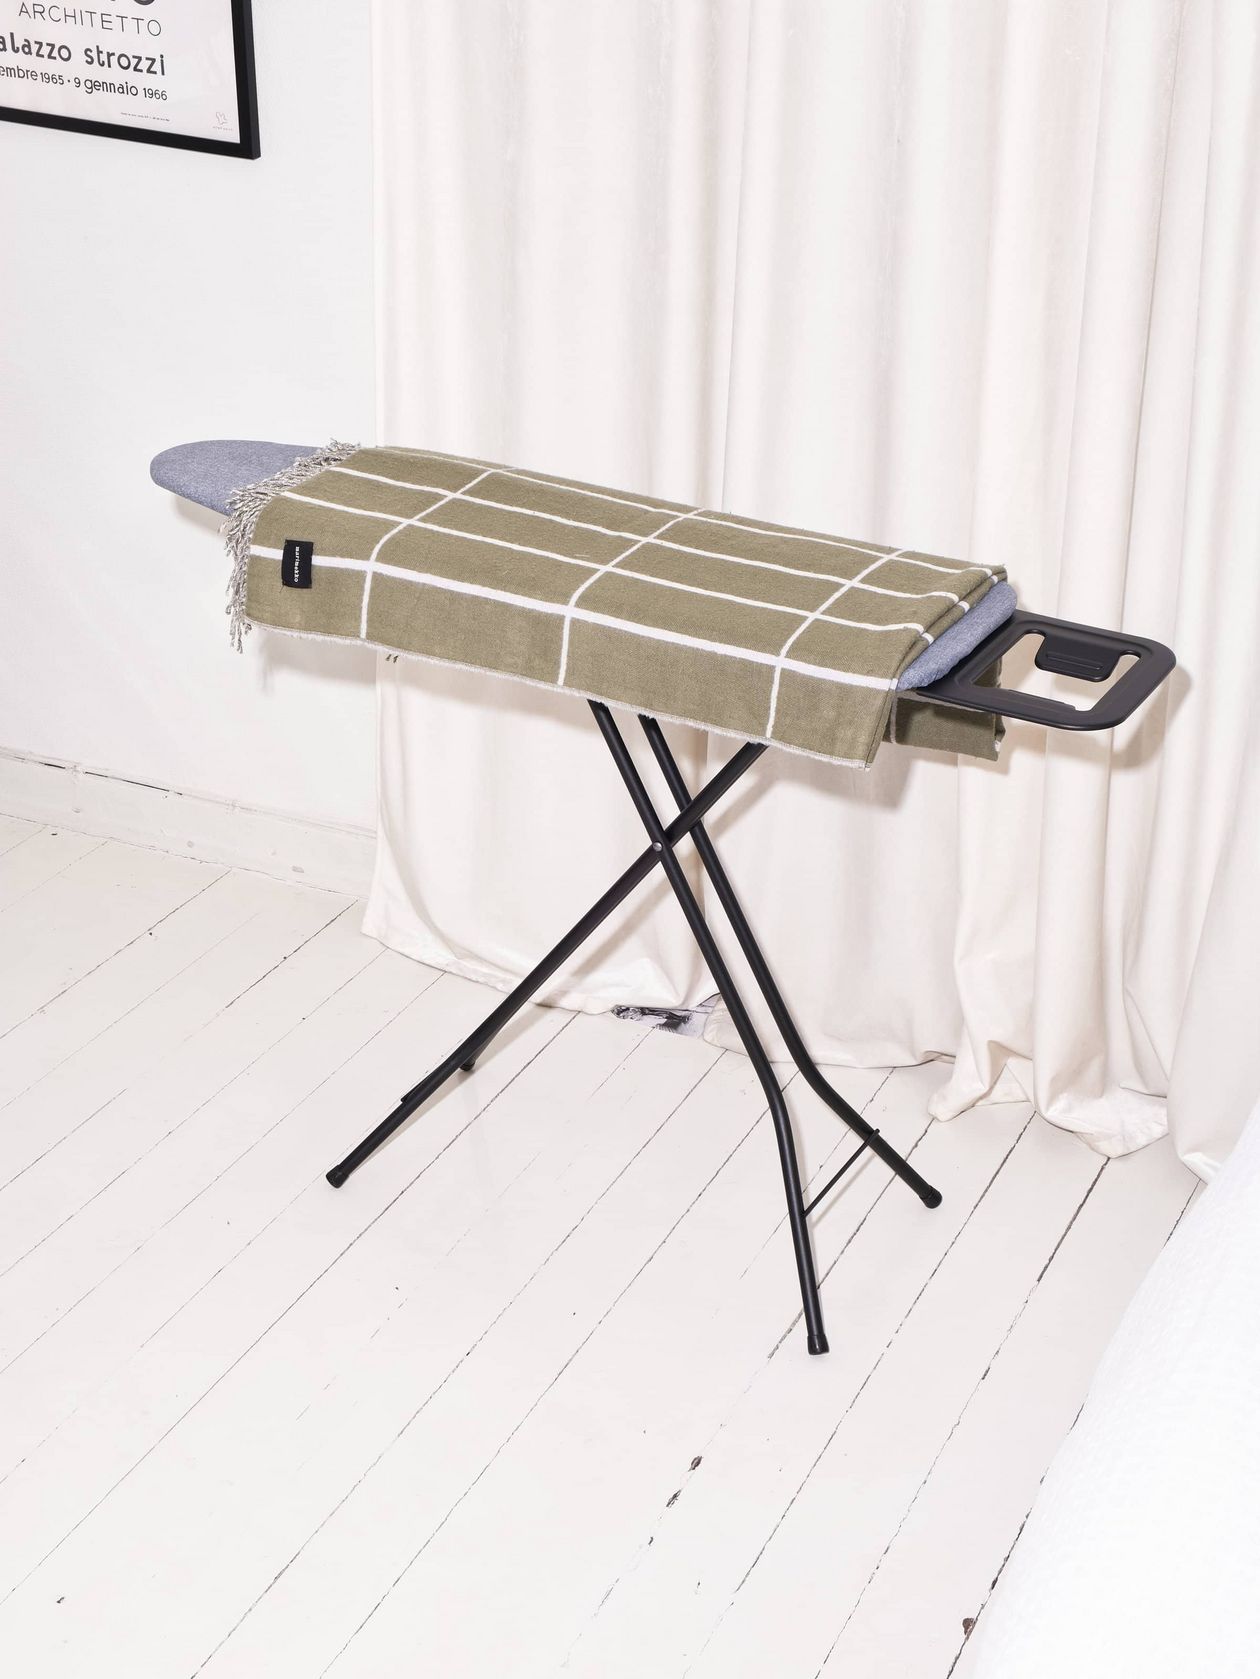 An ironing board